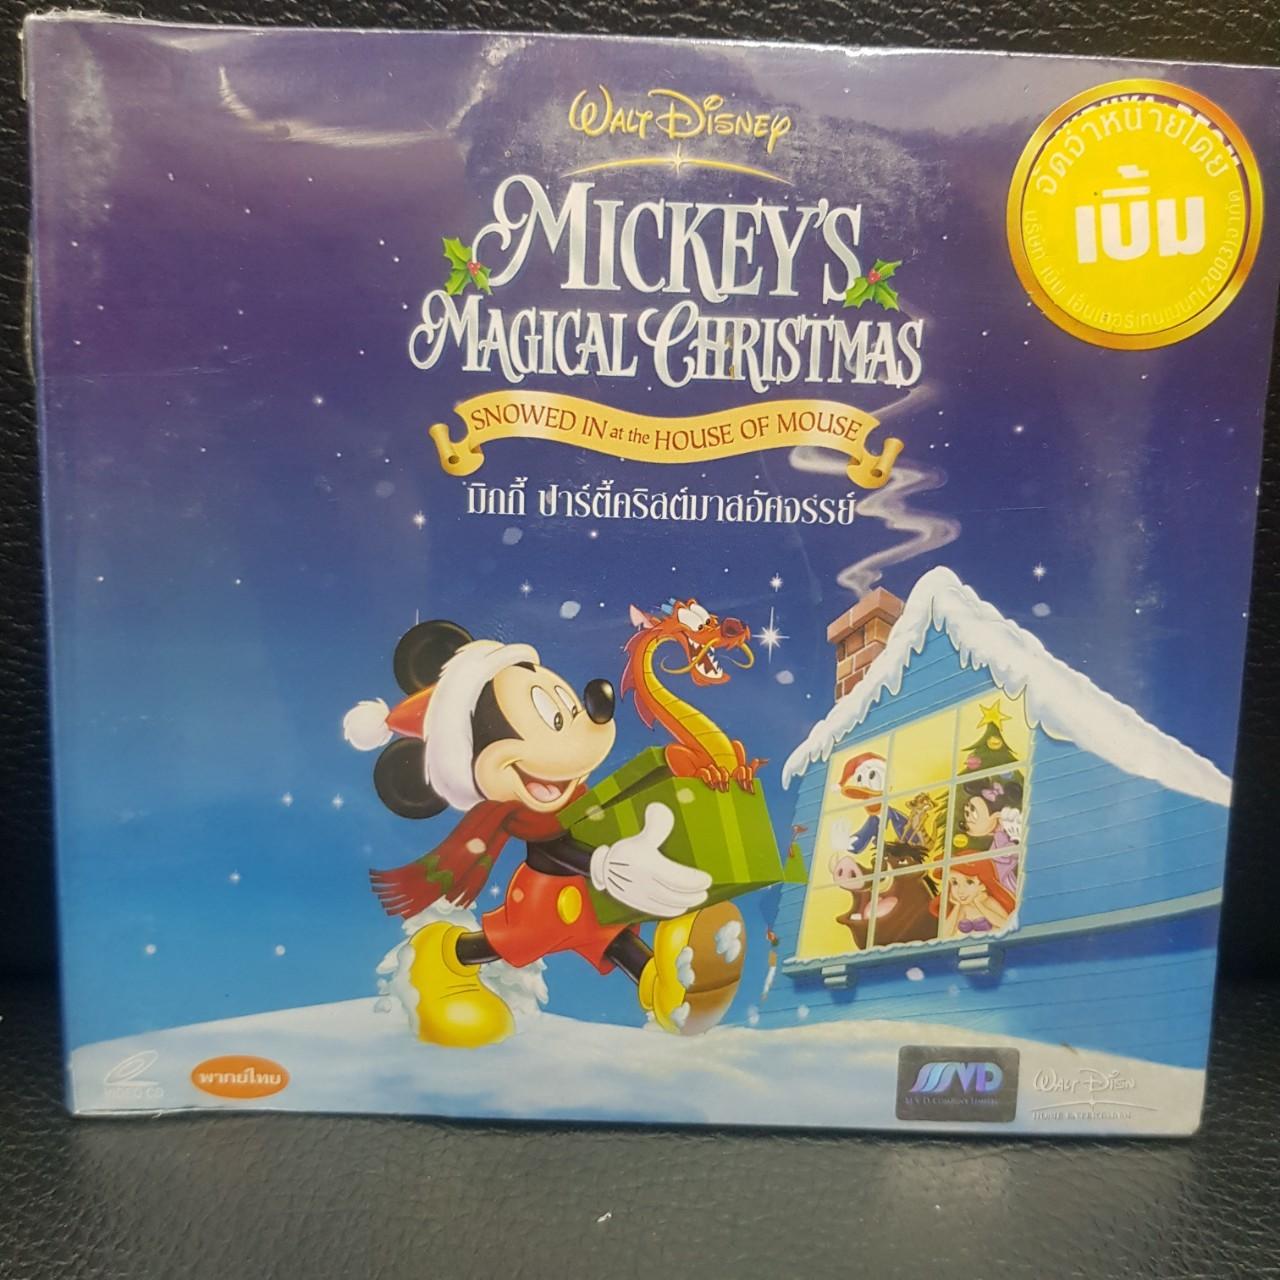 VCDหนัง มิกกี้ ปาร์ตี้คริสต์มาสอัศจรรย์ MICKEY'S MAGICAL CHRISTMAS ฉบับ พากย์ไทย (MVDVCD190-มิกกี้ปาร์ตี้คริสต์มาสอัศจรรย์MICKEY'SMAGICALCHRISTMAS) cartoon การ์ตูน ดิสนีย์ disney MVD หนัง ภาพยนตร์ ดูหนัง ดีวีโอซีดี วีซีดี VCD มาสเตอร์แท้ STARMART